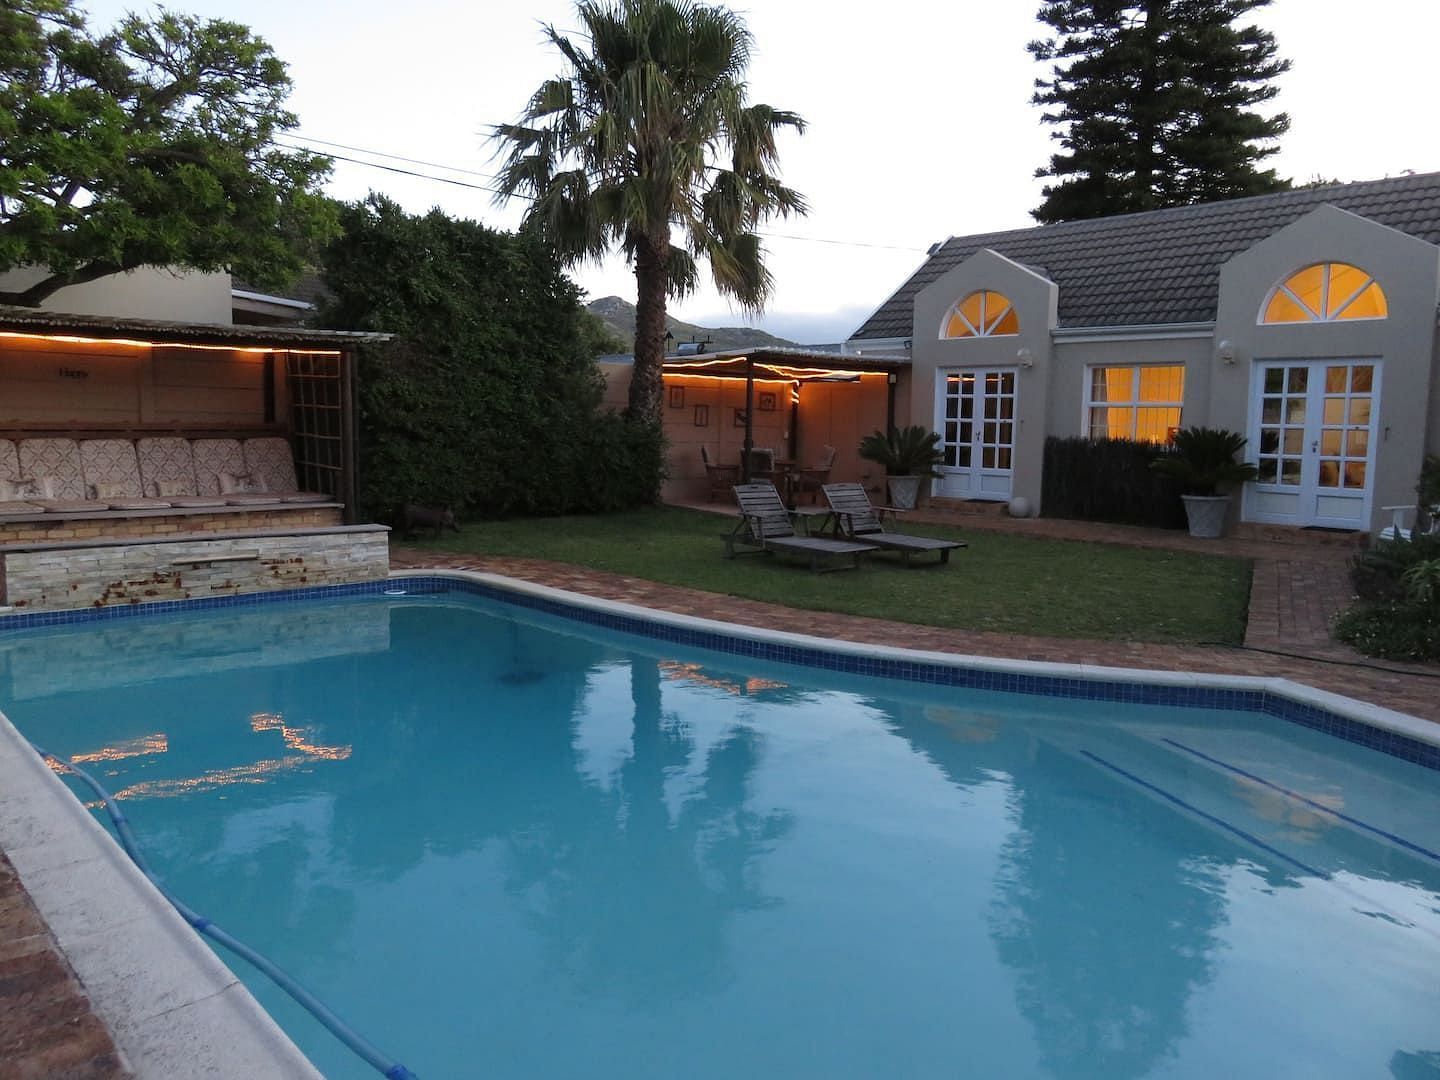 JWguest Residential Home at Cape Town, Western Cape | Wonderful Studio Apartment between 2 Oceans #2 | Jwbnb no brobnb 18